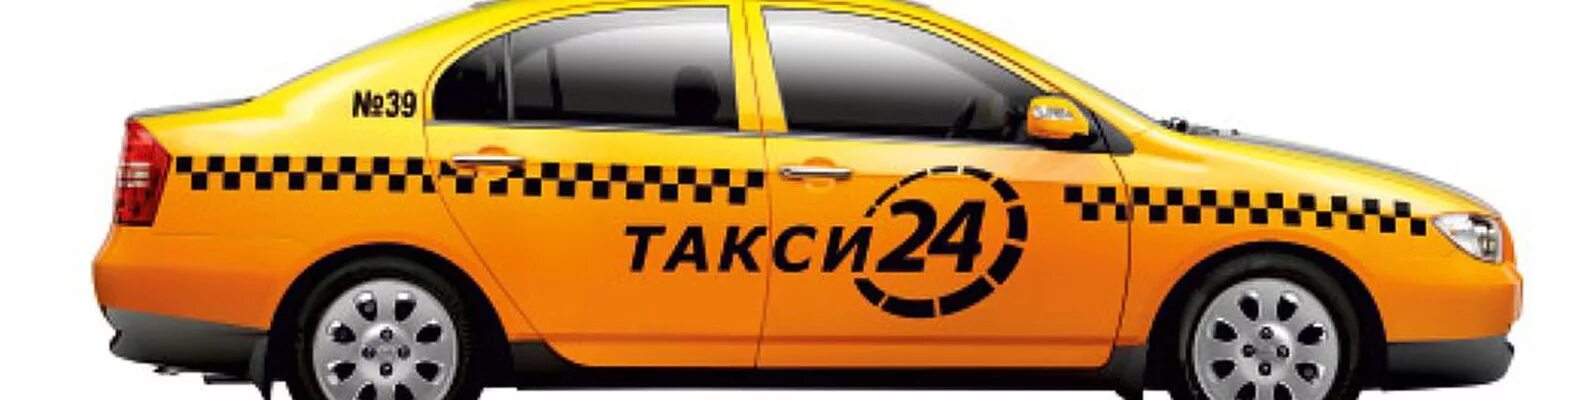 Такси 24 телефон. Машина "такси". Такси картинки. Такси 24 24 24. Такси в городе.